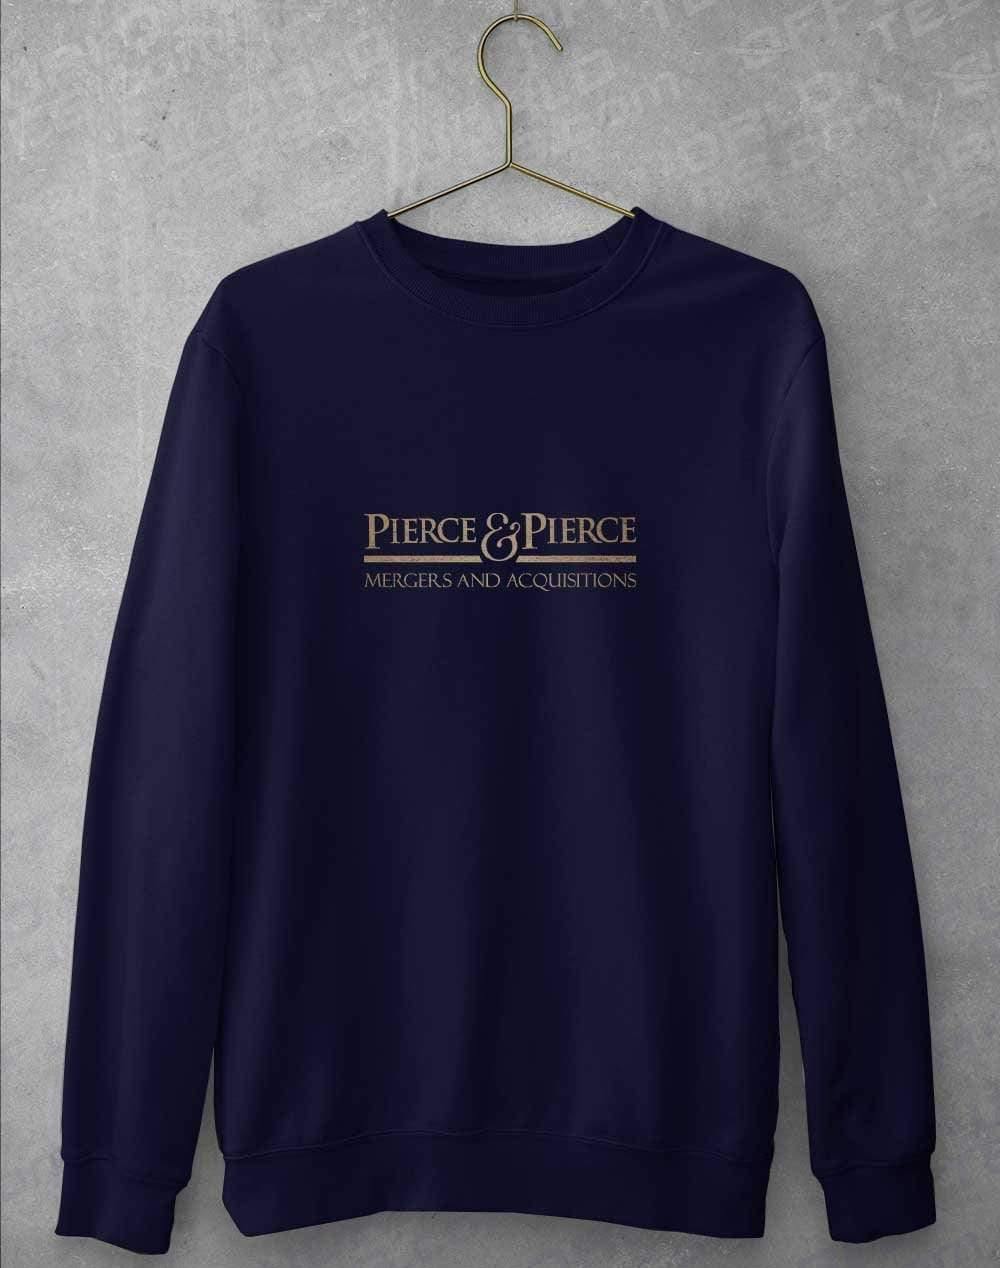 Pierce and Pierce Sweatshirt S / Oxford Navy  - Off World Tees